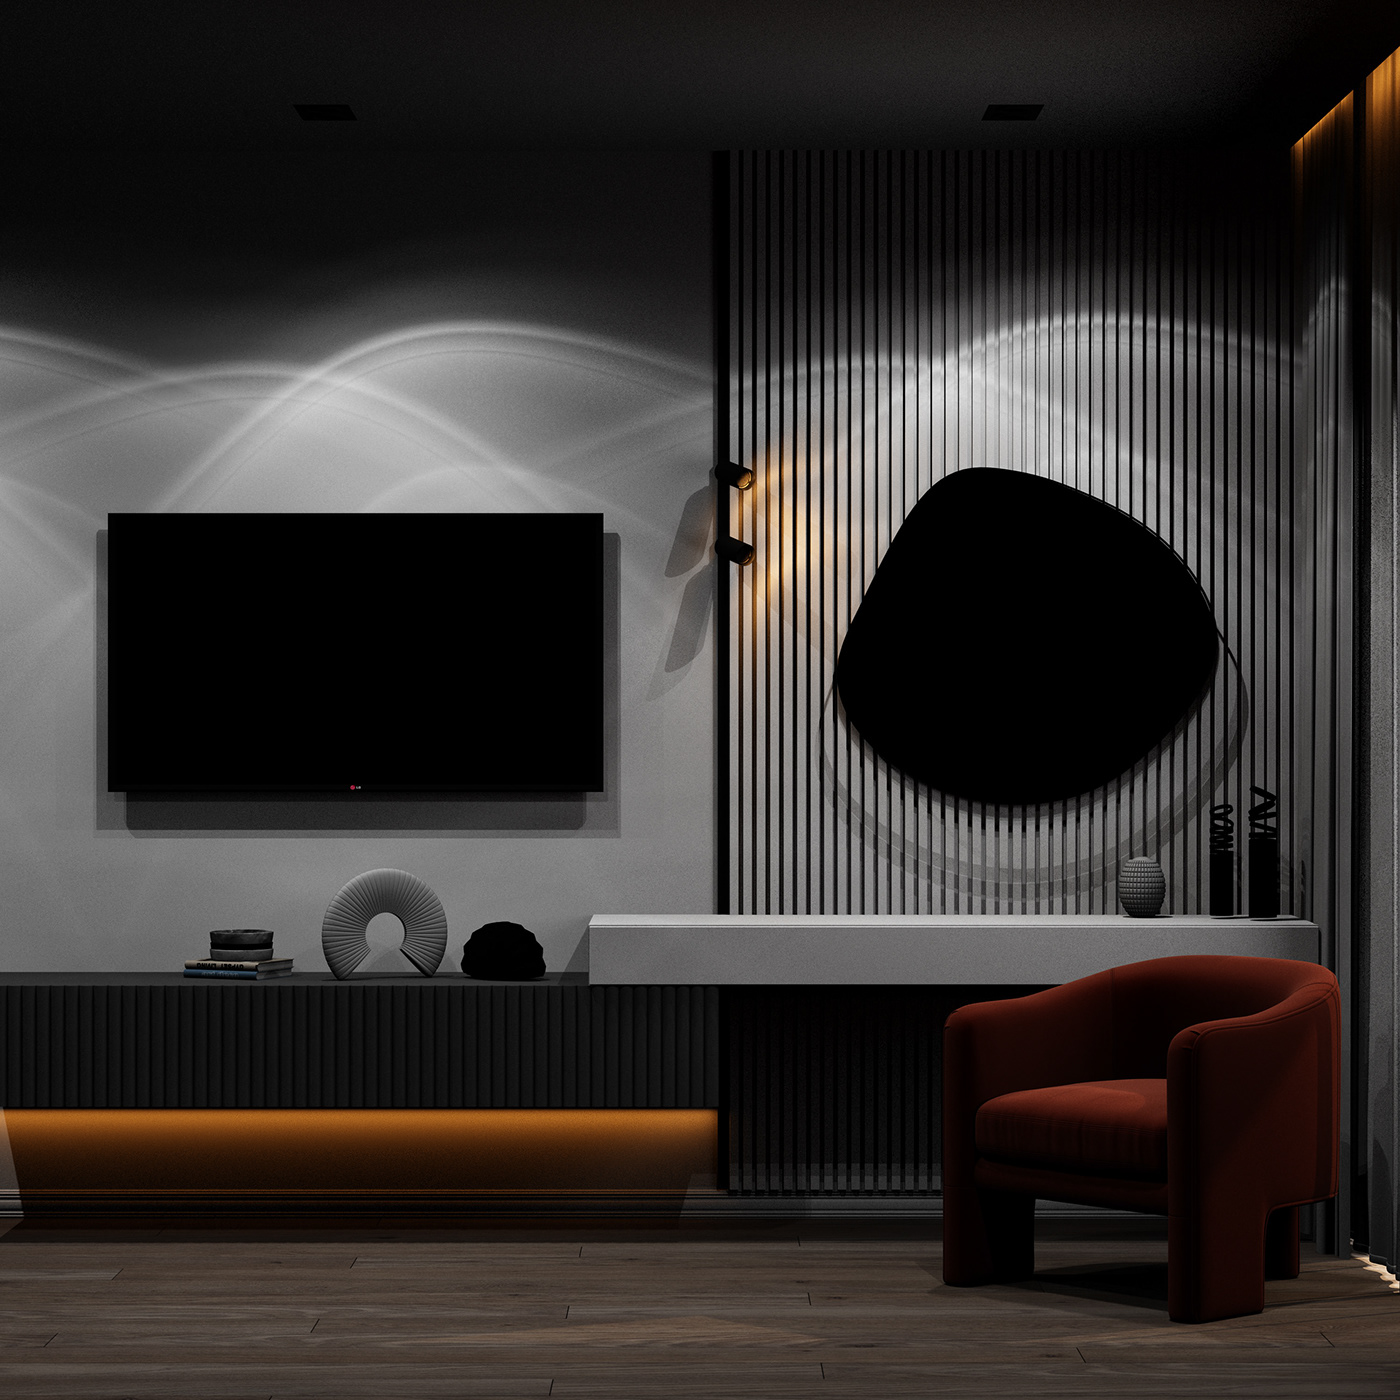 wall Interior design cozy mirror black and white interior design  vray modern minimal